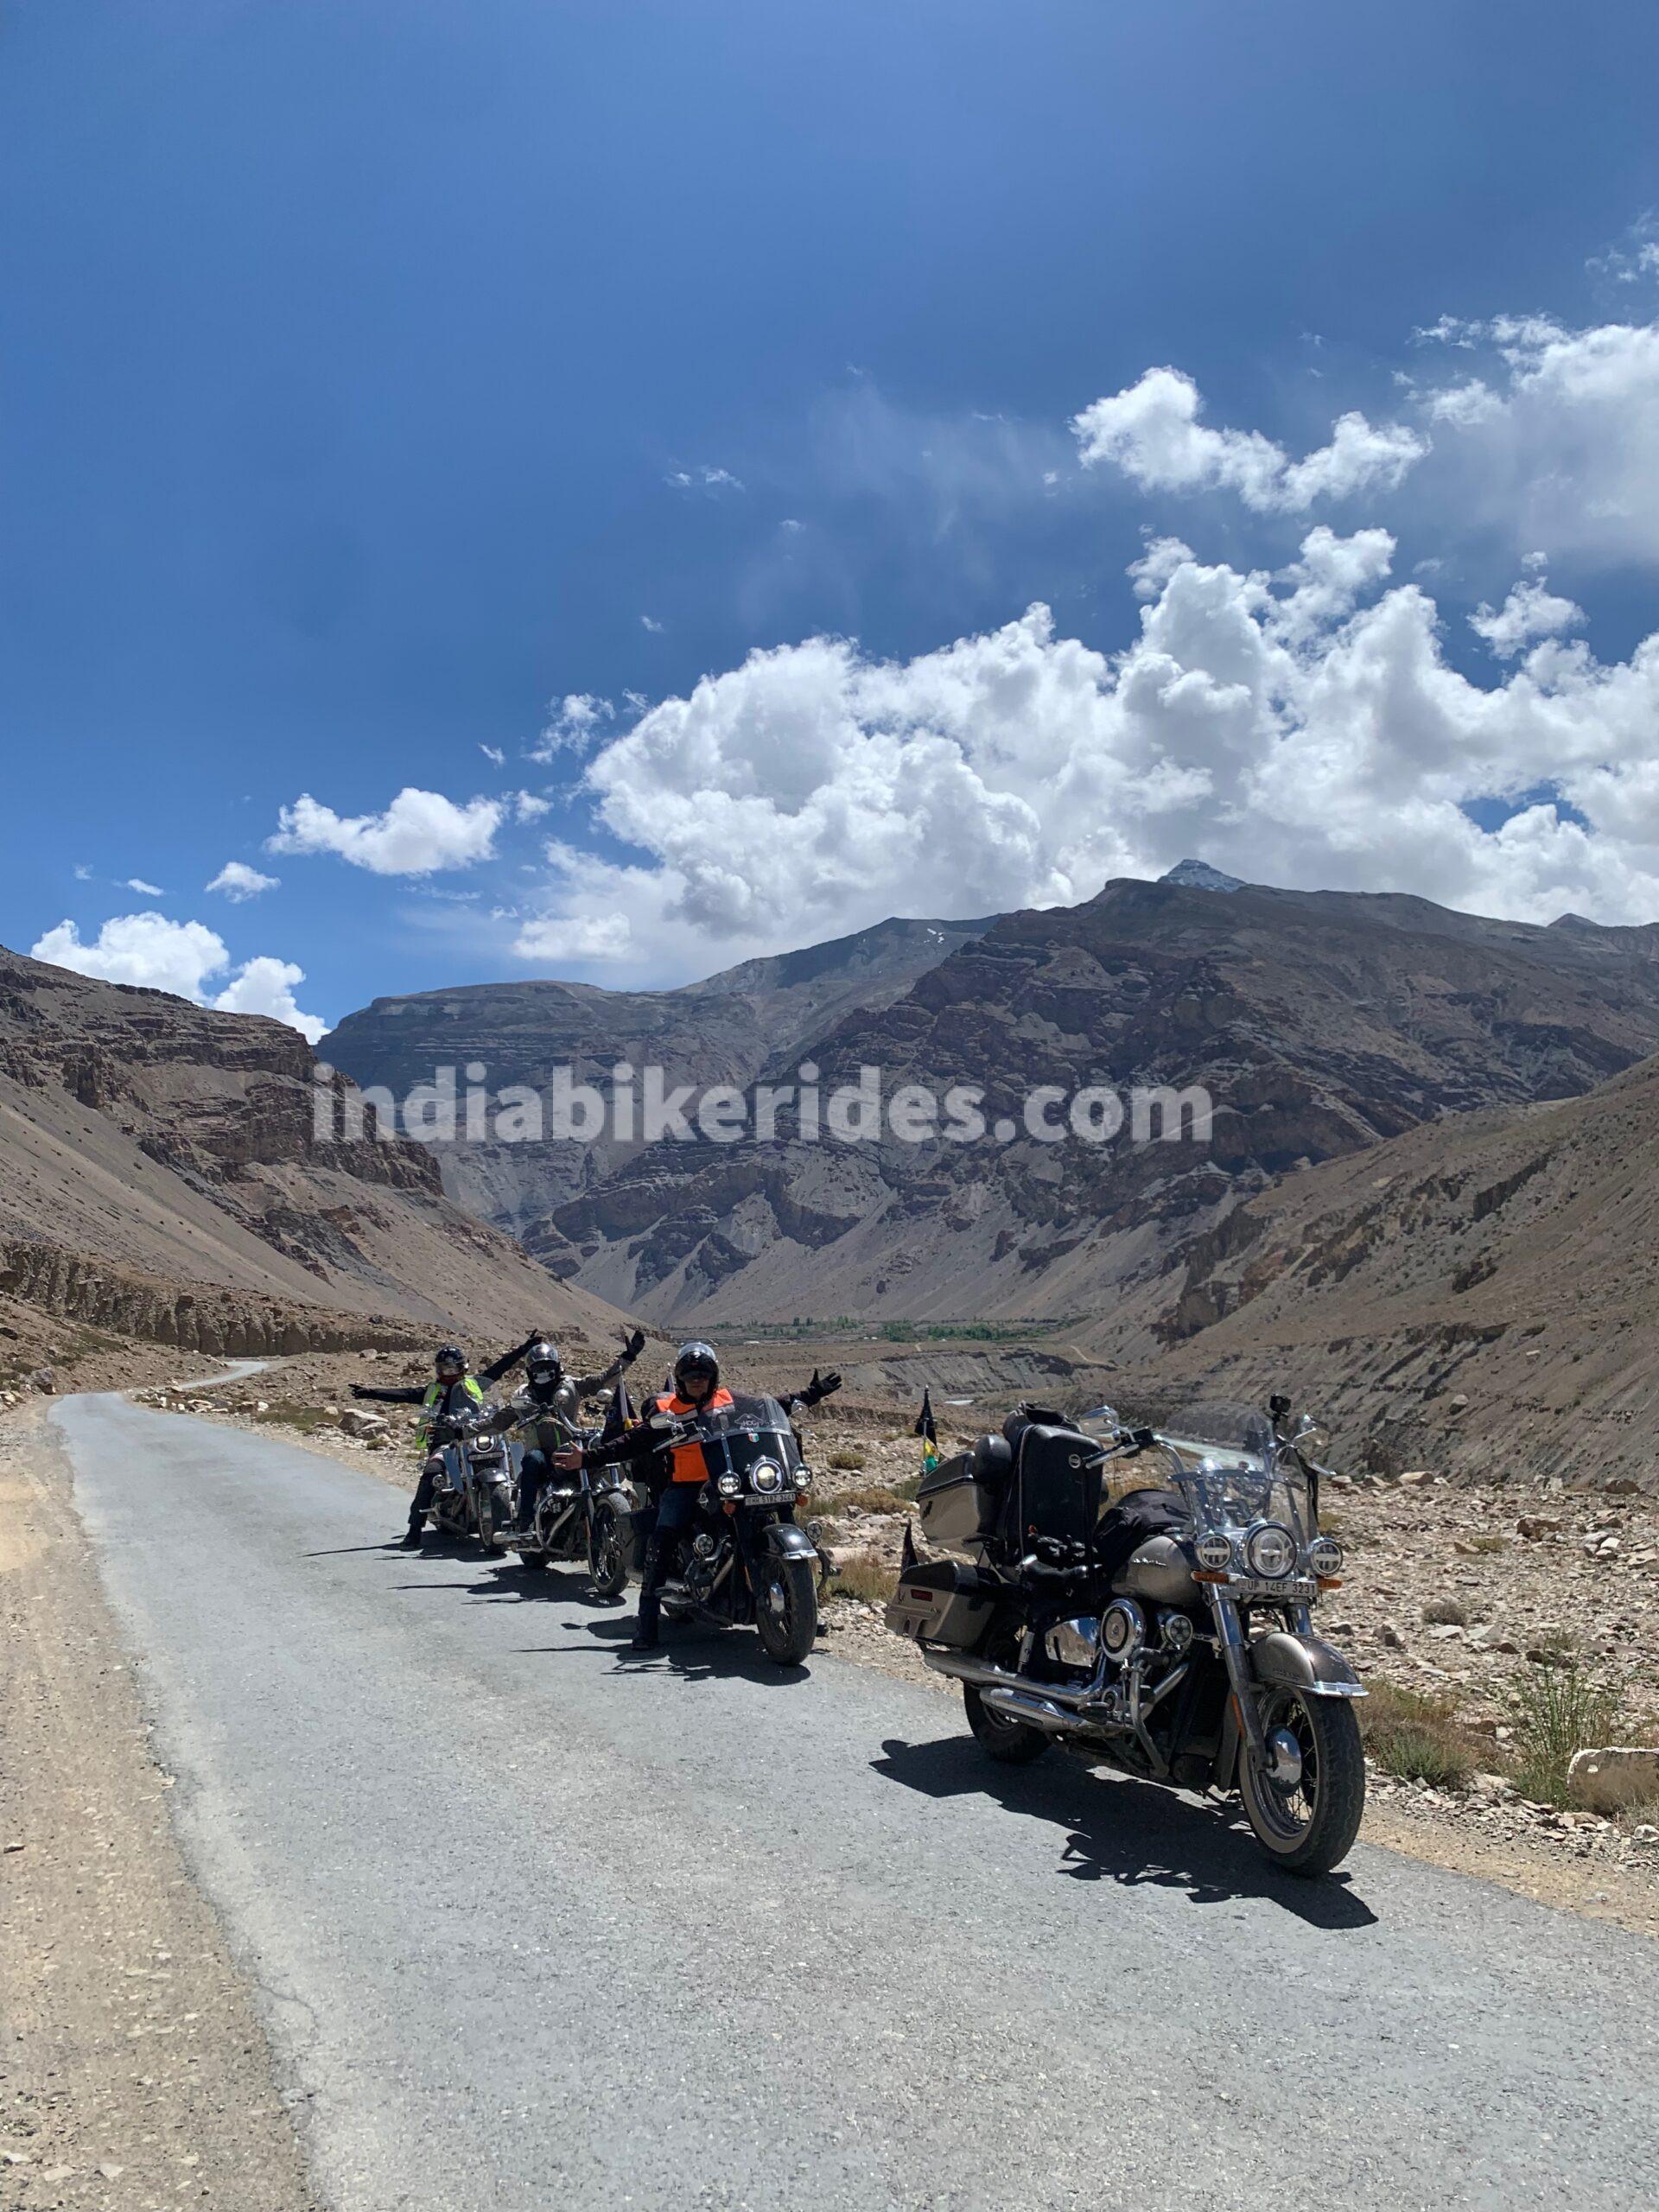 Harley Davidson, Spiti Valley, India Bike rides